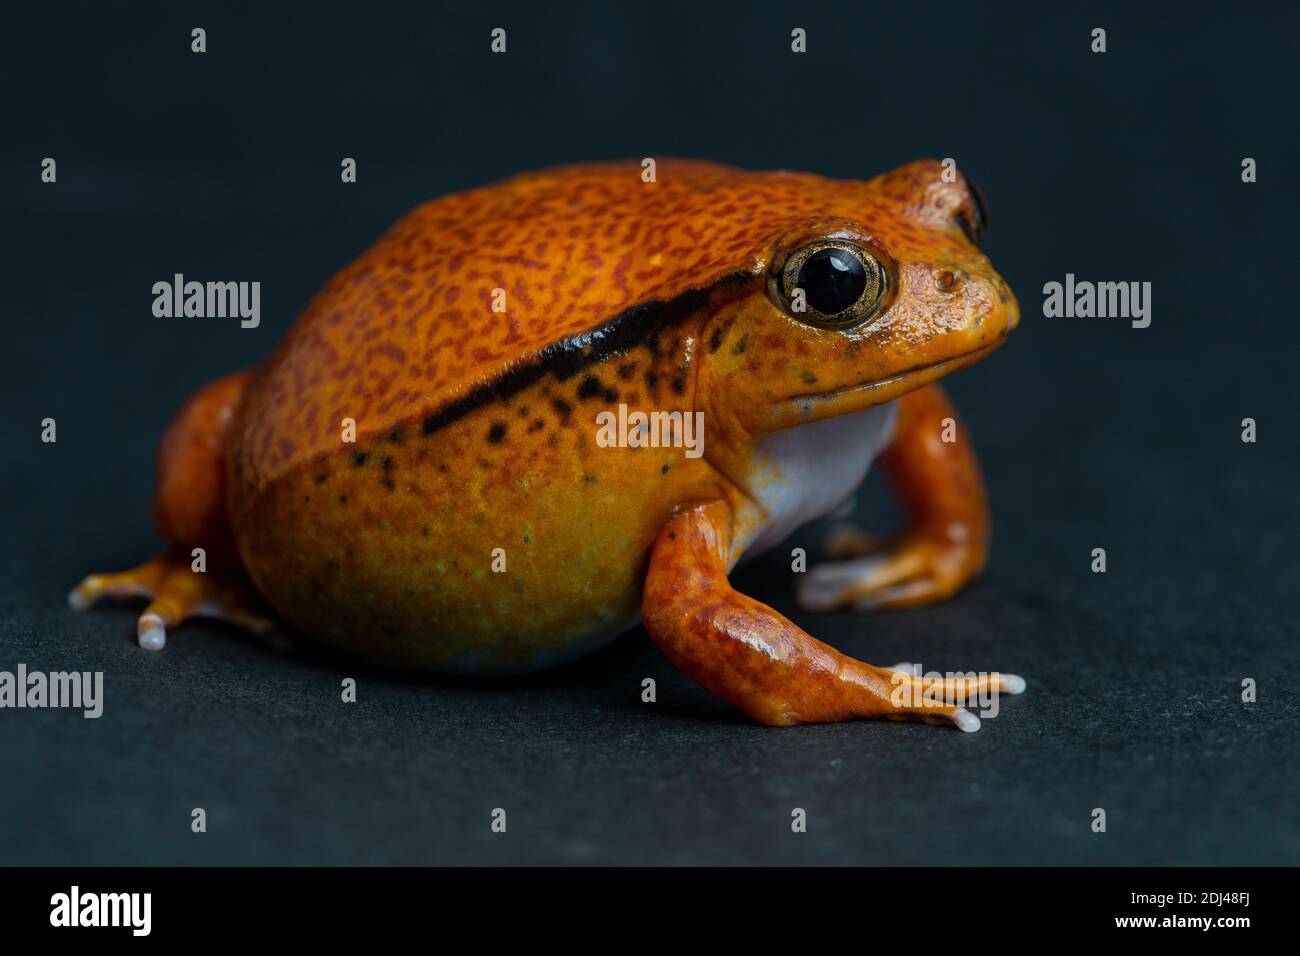 pet, love,animal, frog, toad, tomato frog, tree, wildlife, studio background, animal, cute, orange, red, small frog, cute, lizard, dark background,eee Stock Photo